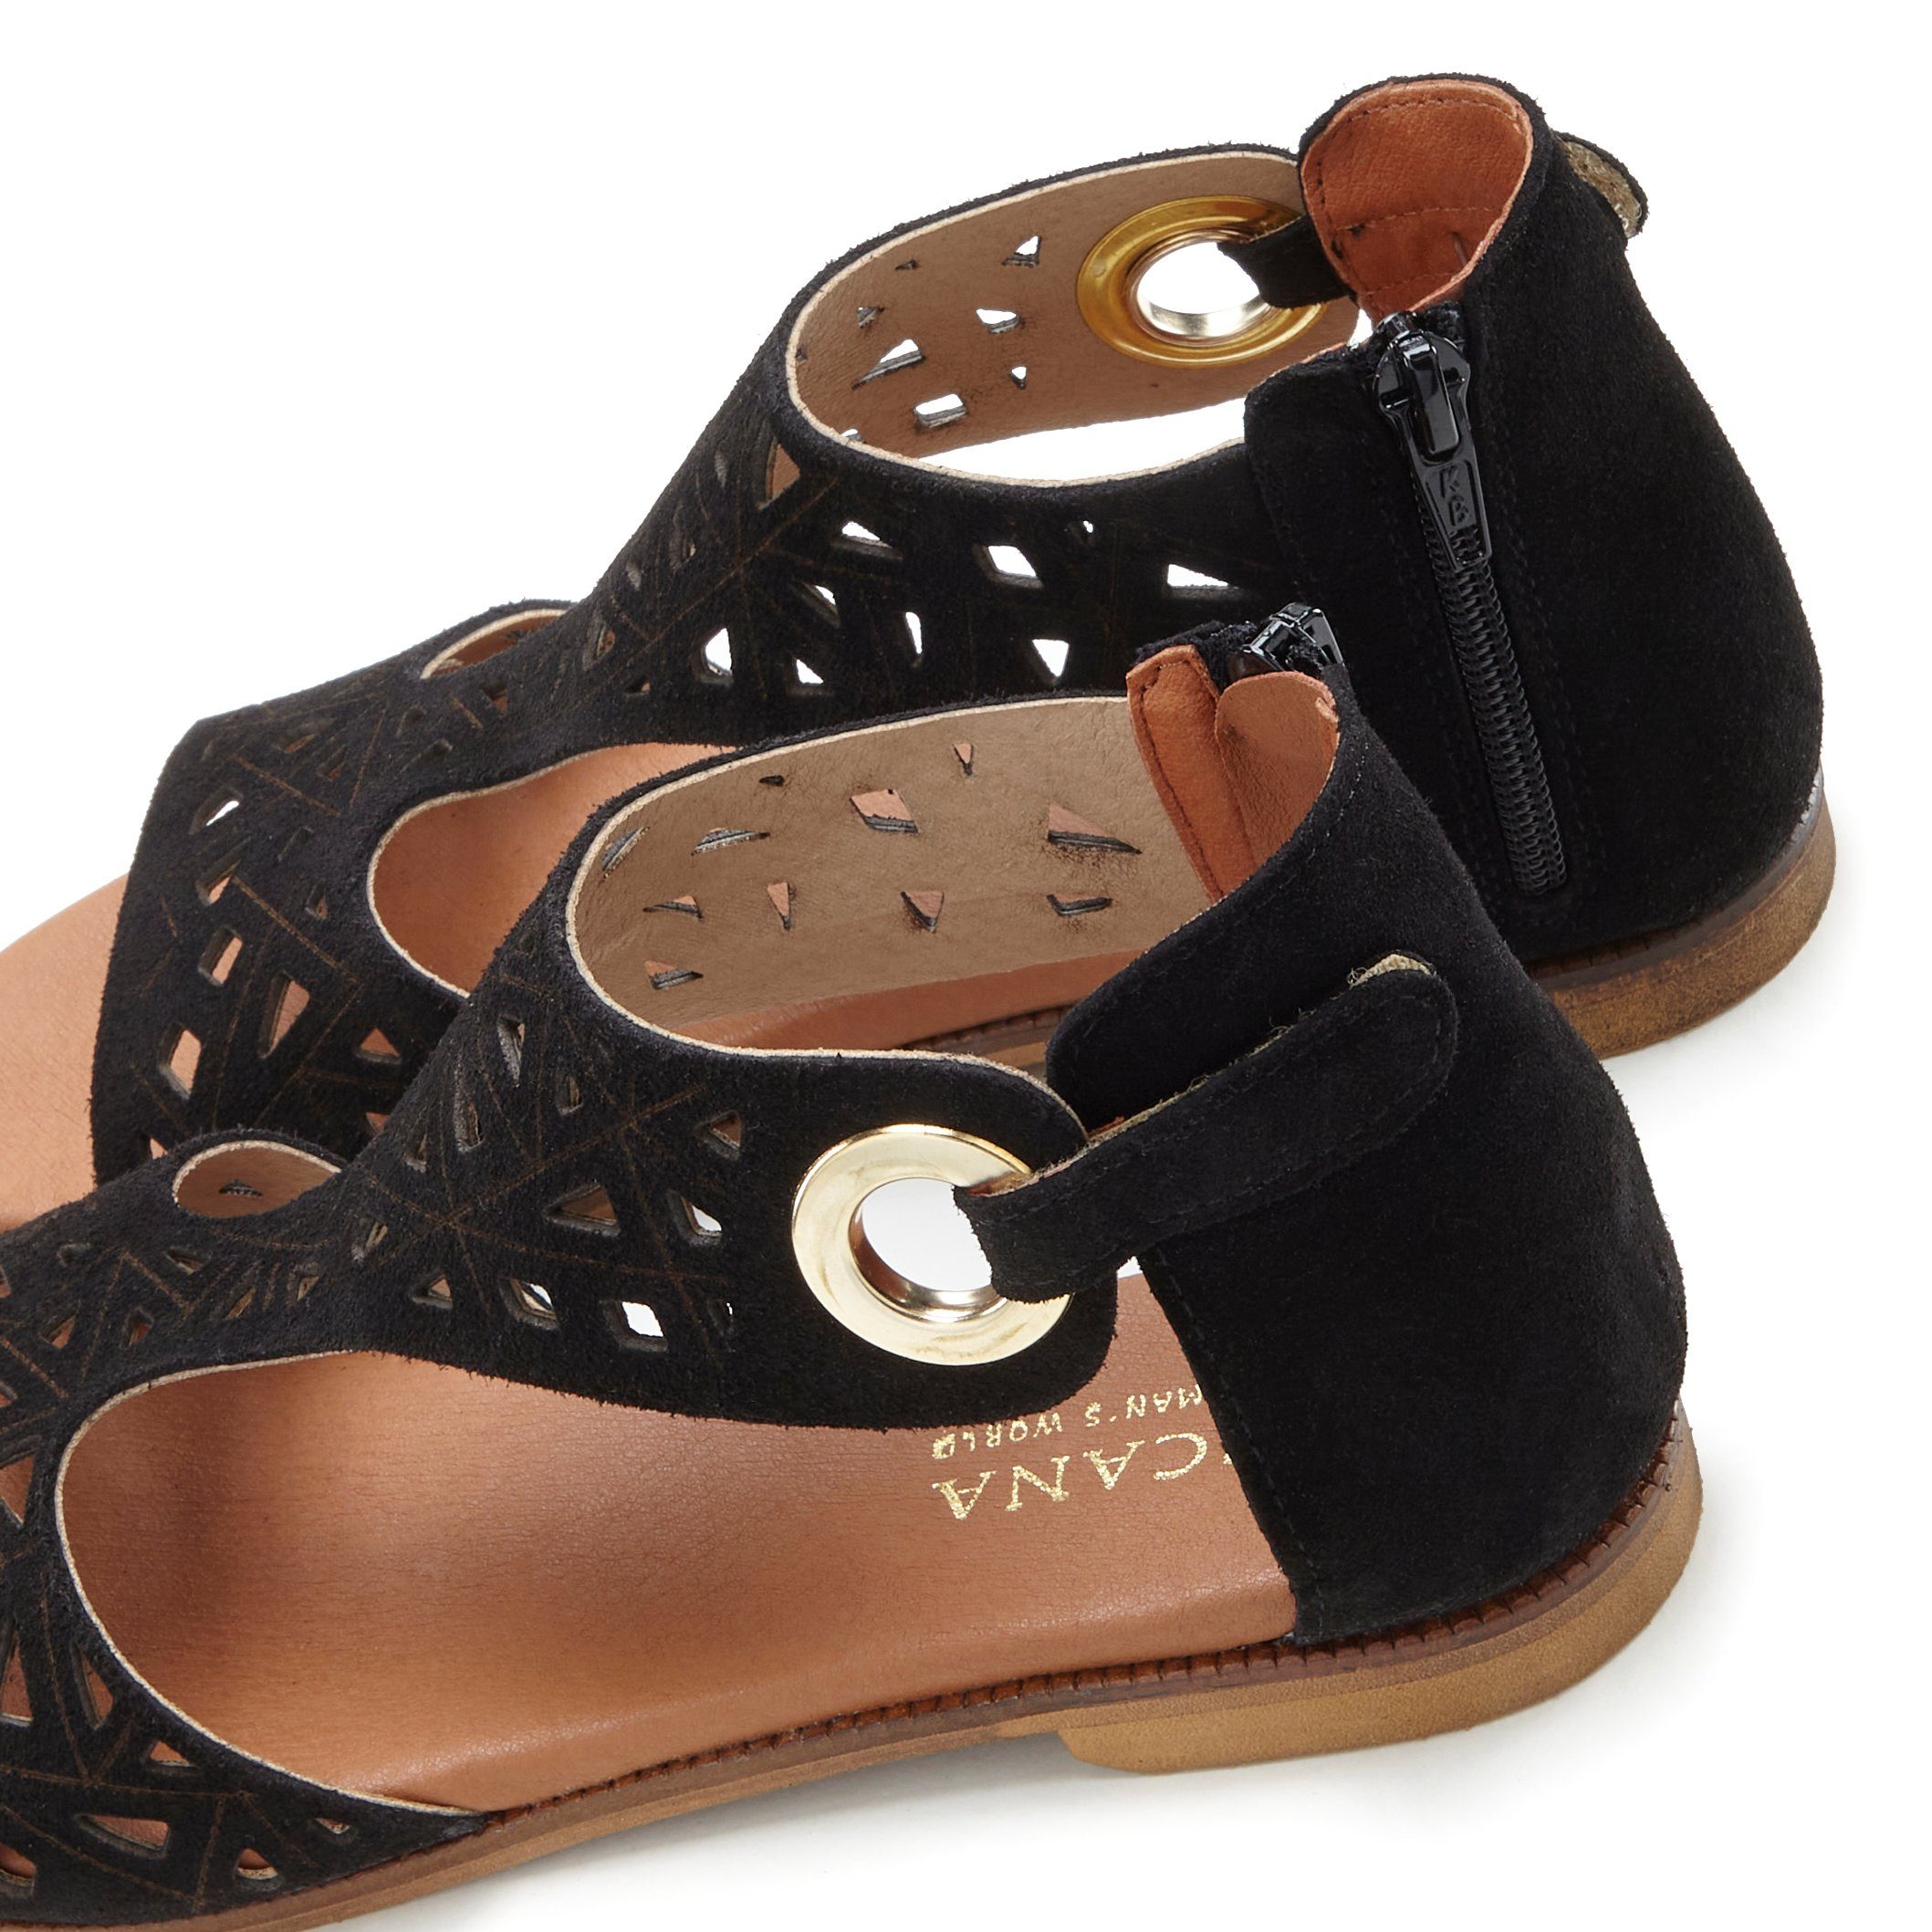 LASCANA Sandale Sandalette, Sommerschuh aus Cut-Outs schwarz hochwertigem Leder mit